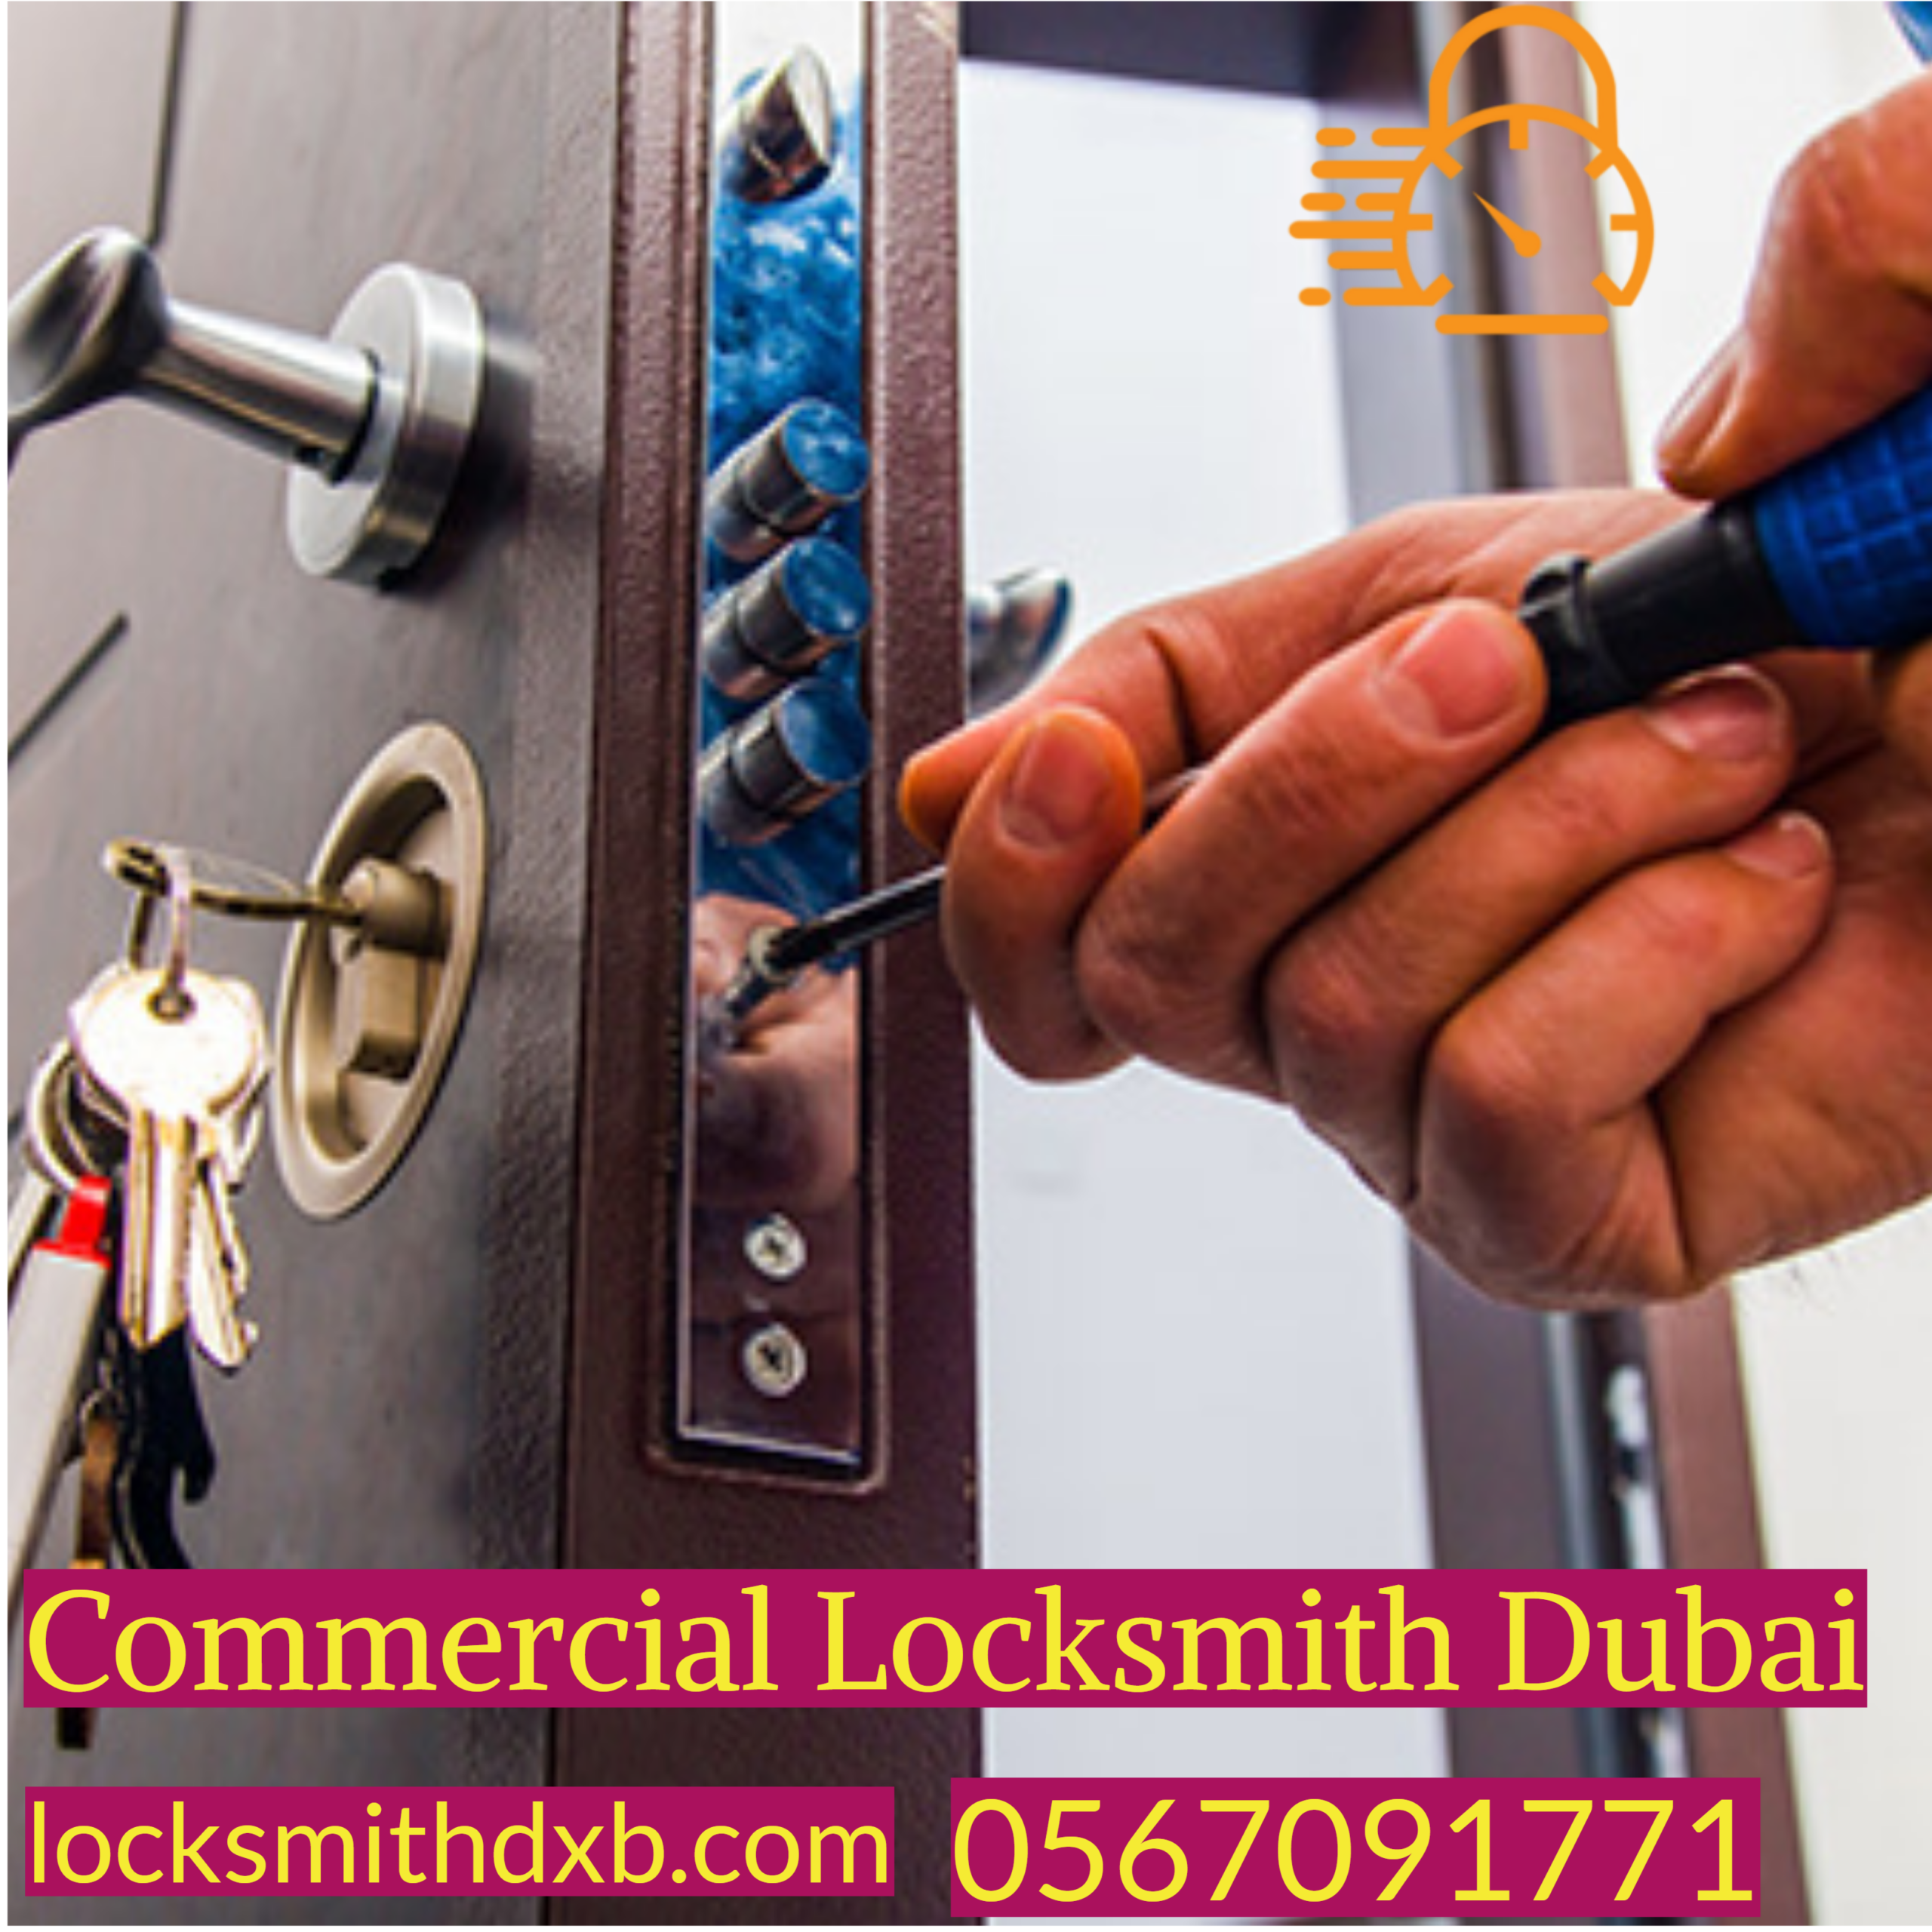 Commercial Locksmith Dubai